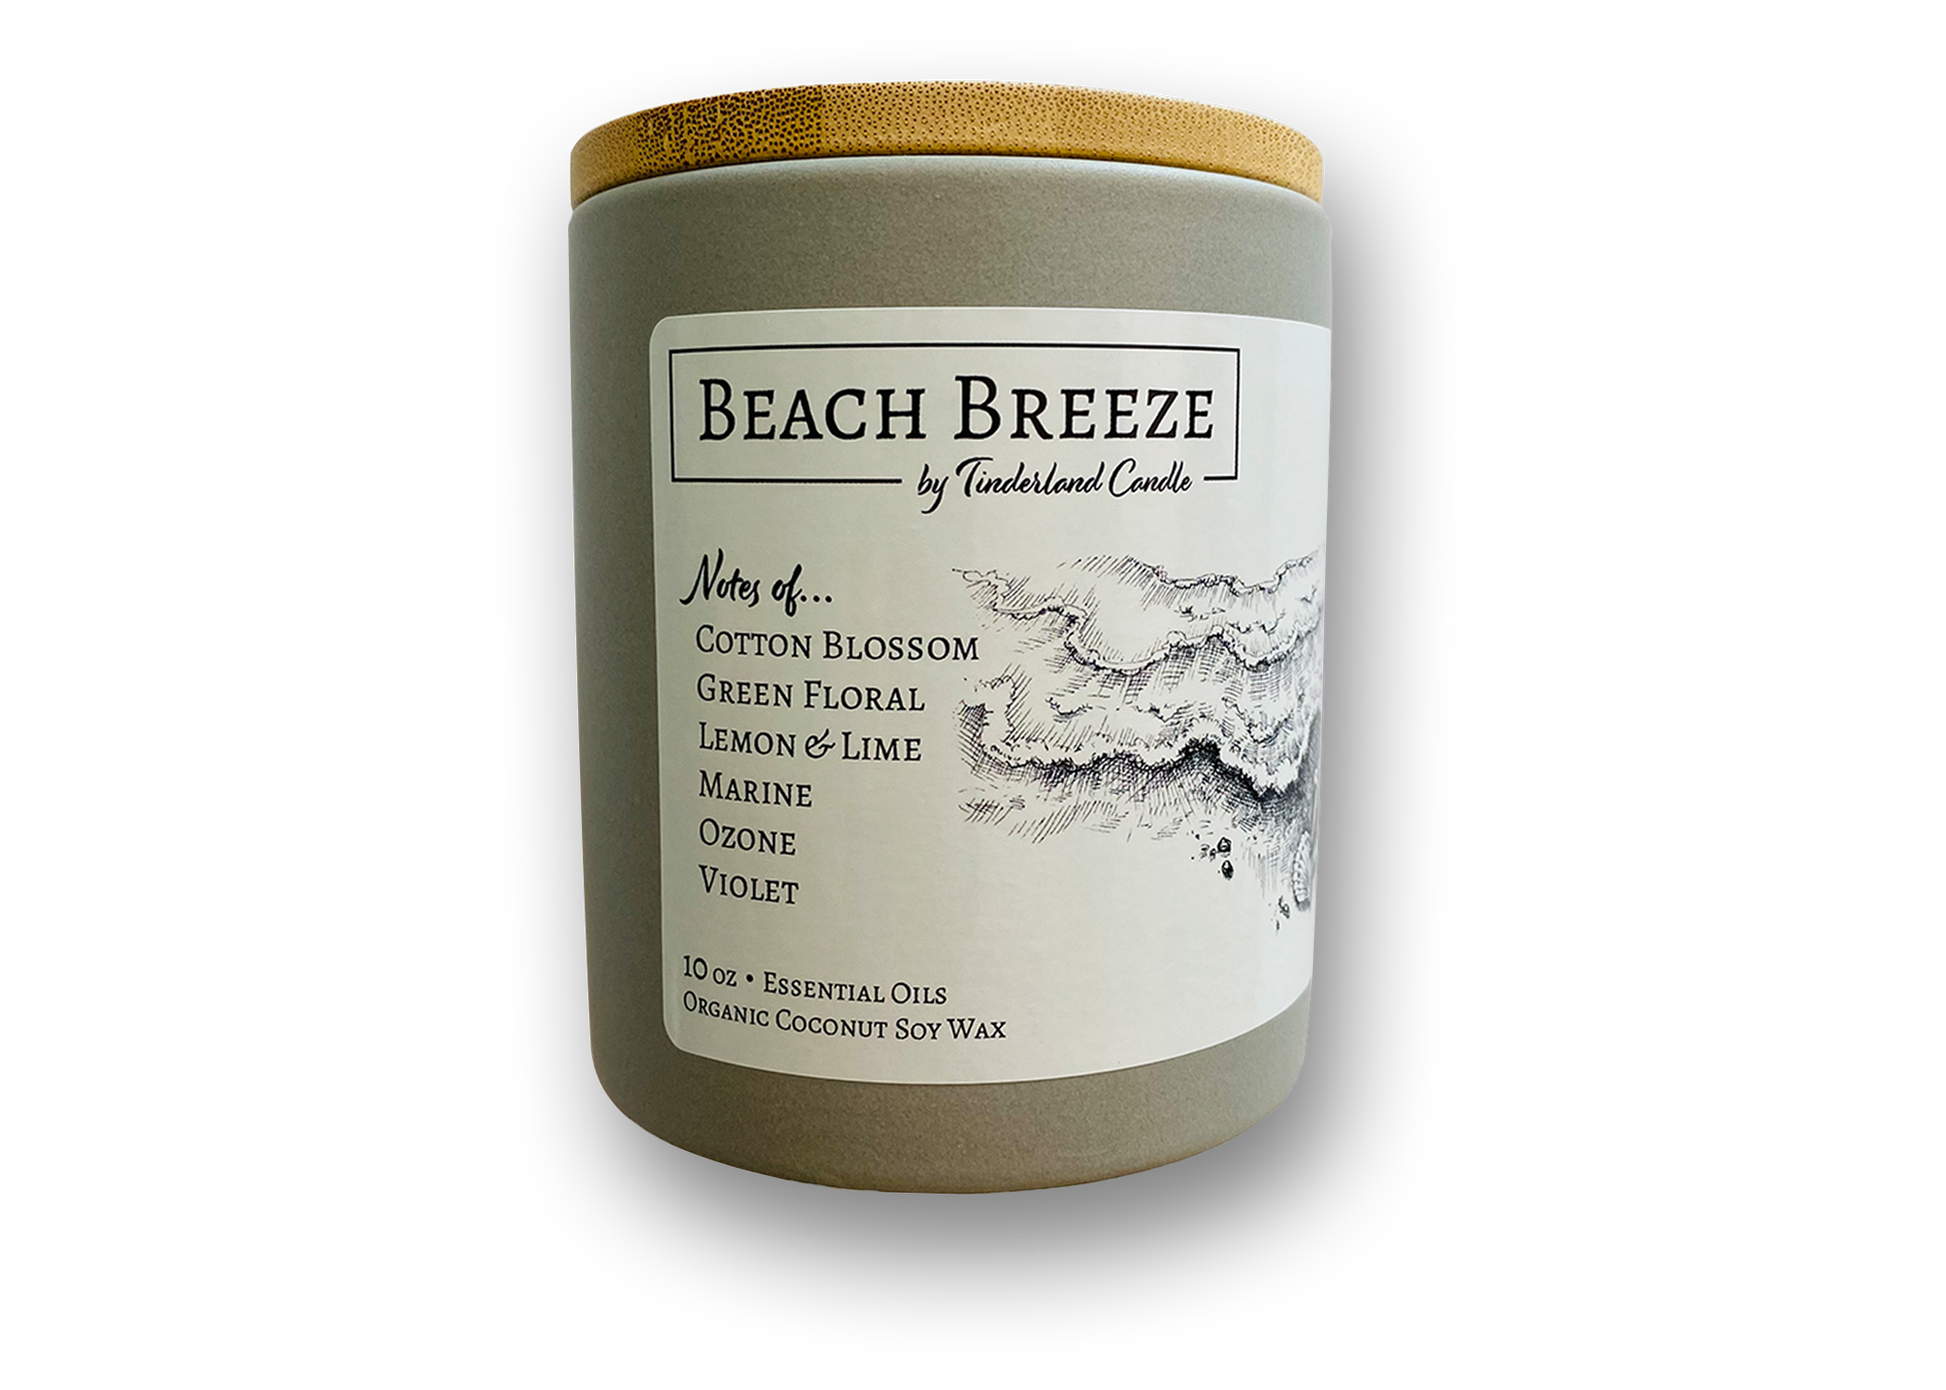 Beach Breeze Candle Tinderland Candle